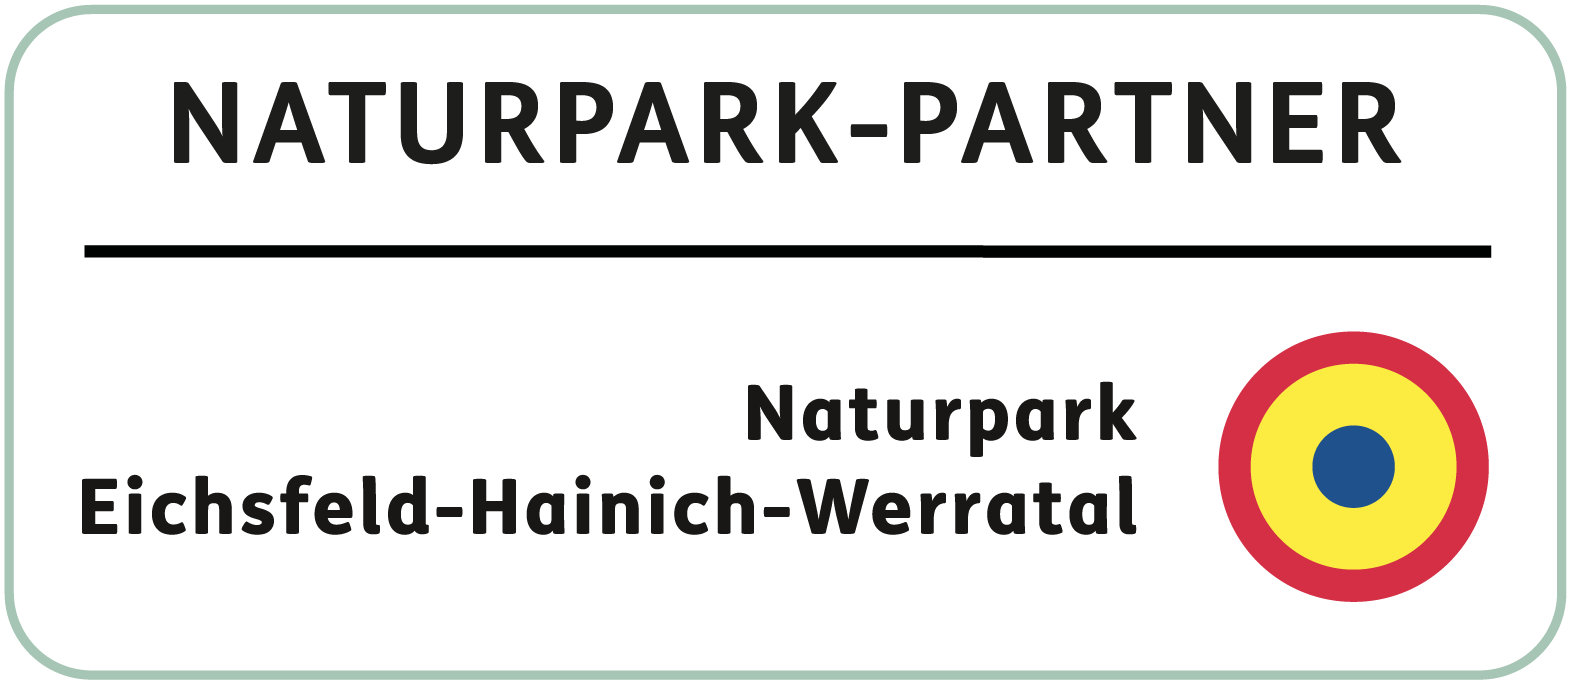 Das Logo der Naturpark-Partner